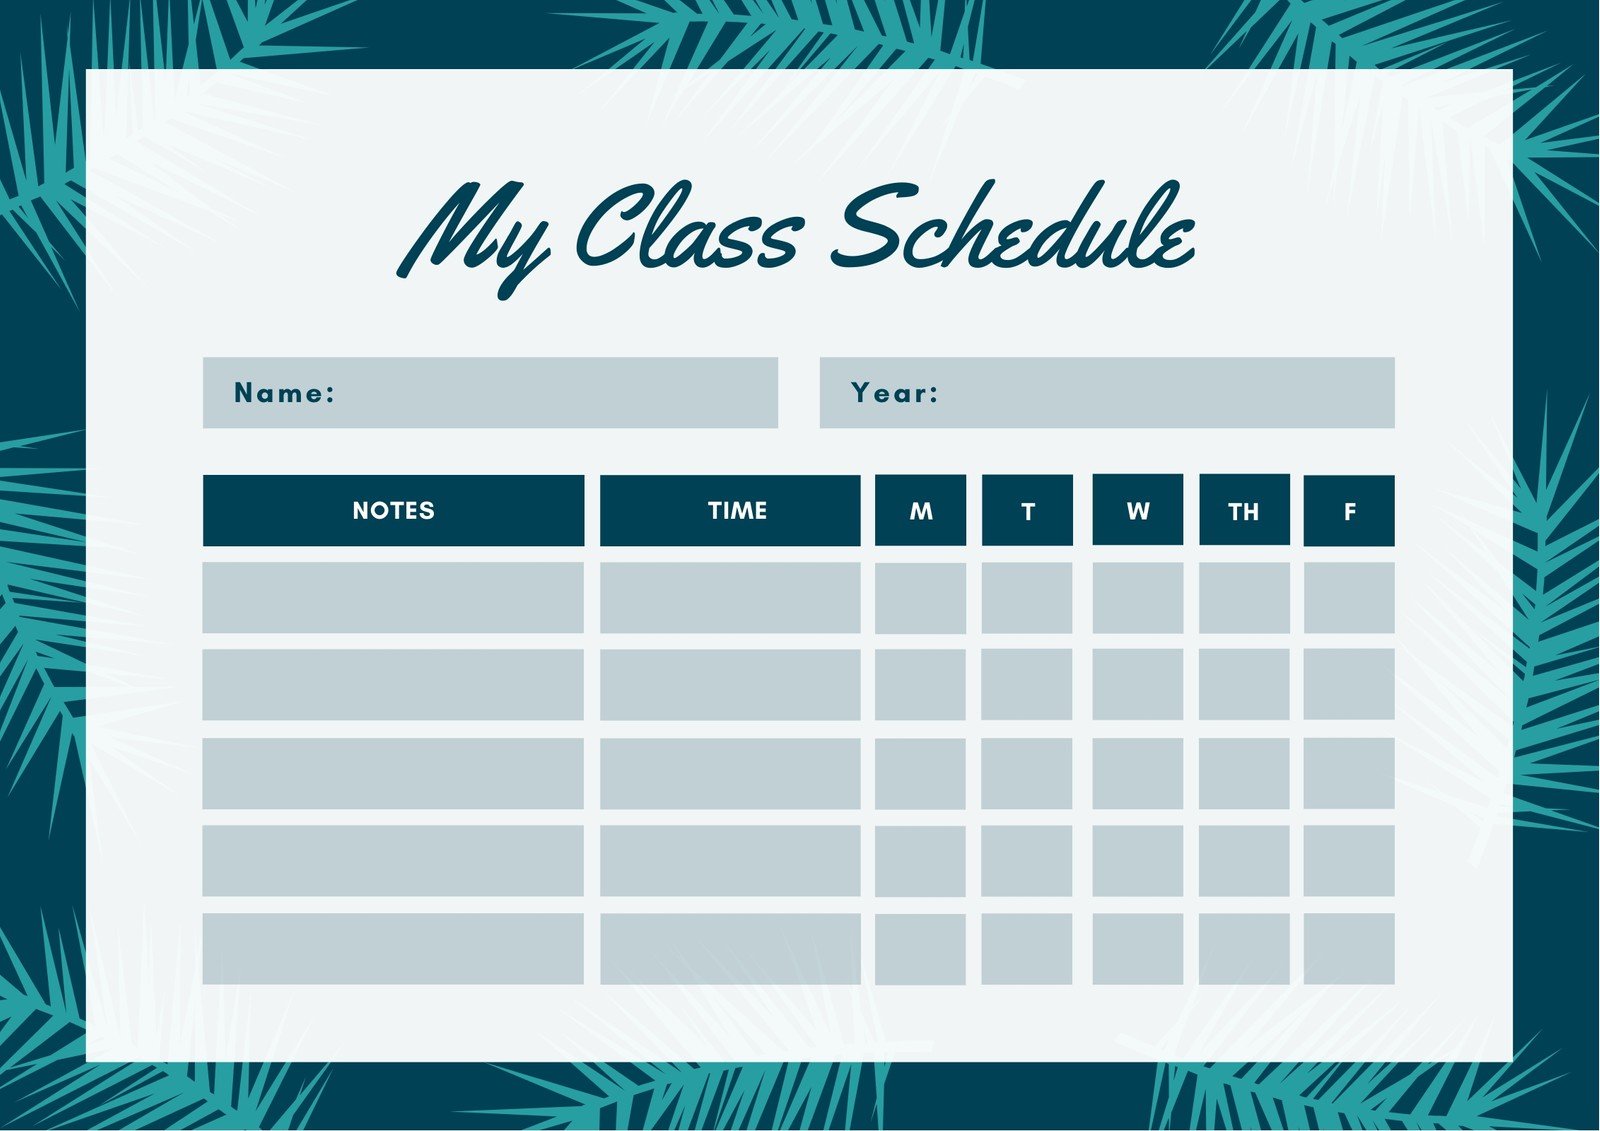 class schedule ut creator